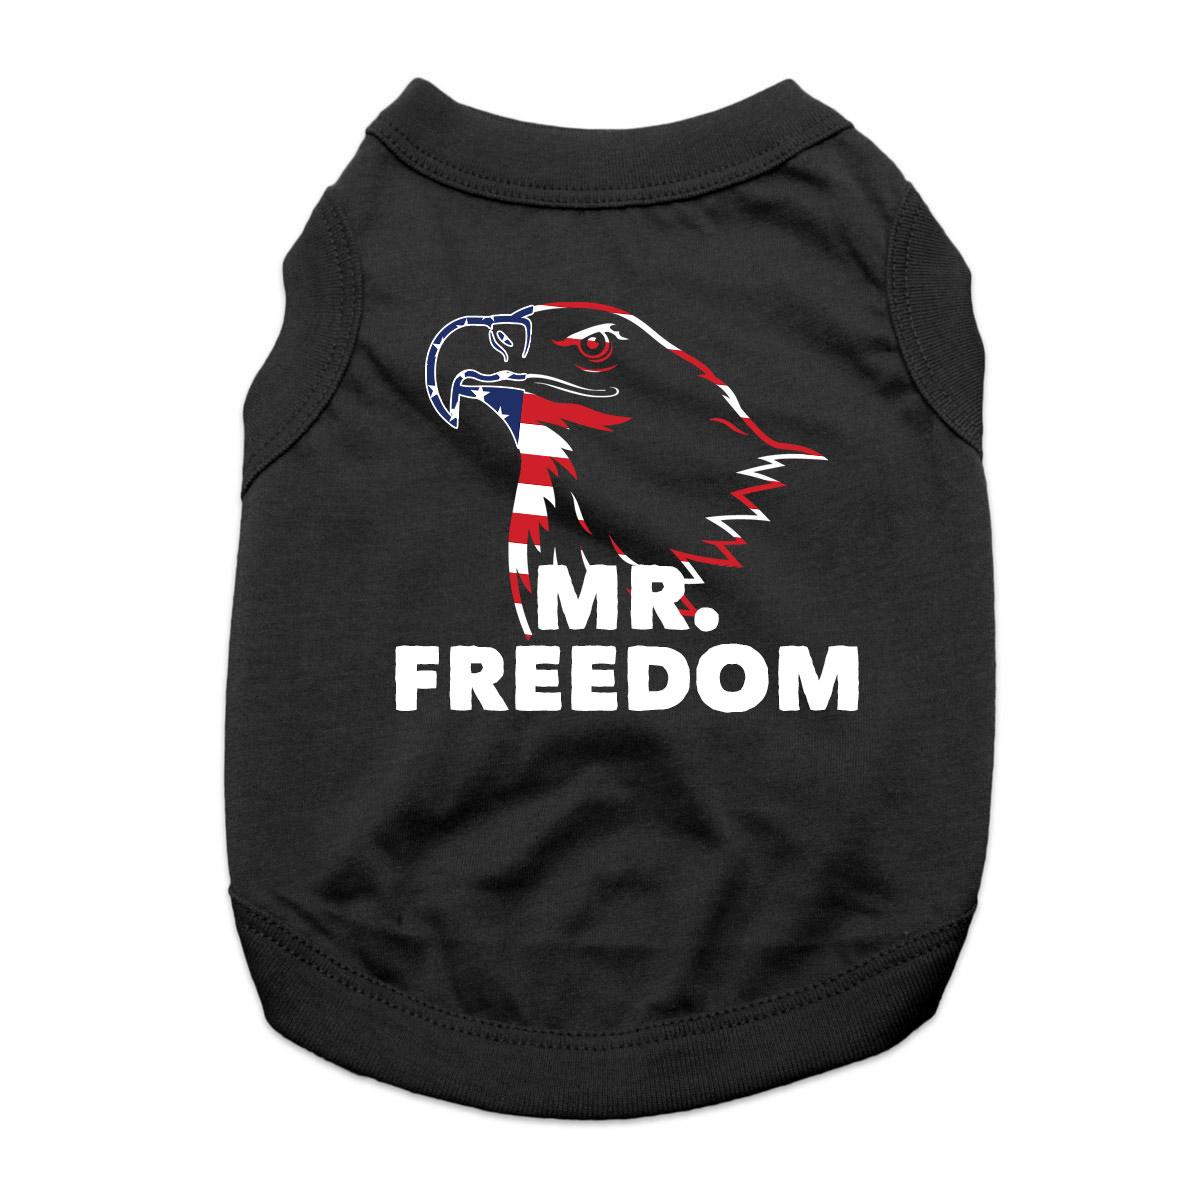 Mr. Freedom Dog Shirt - Black